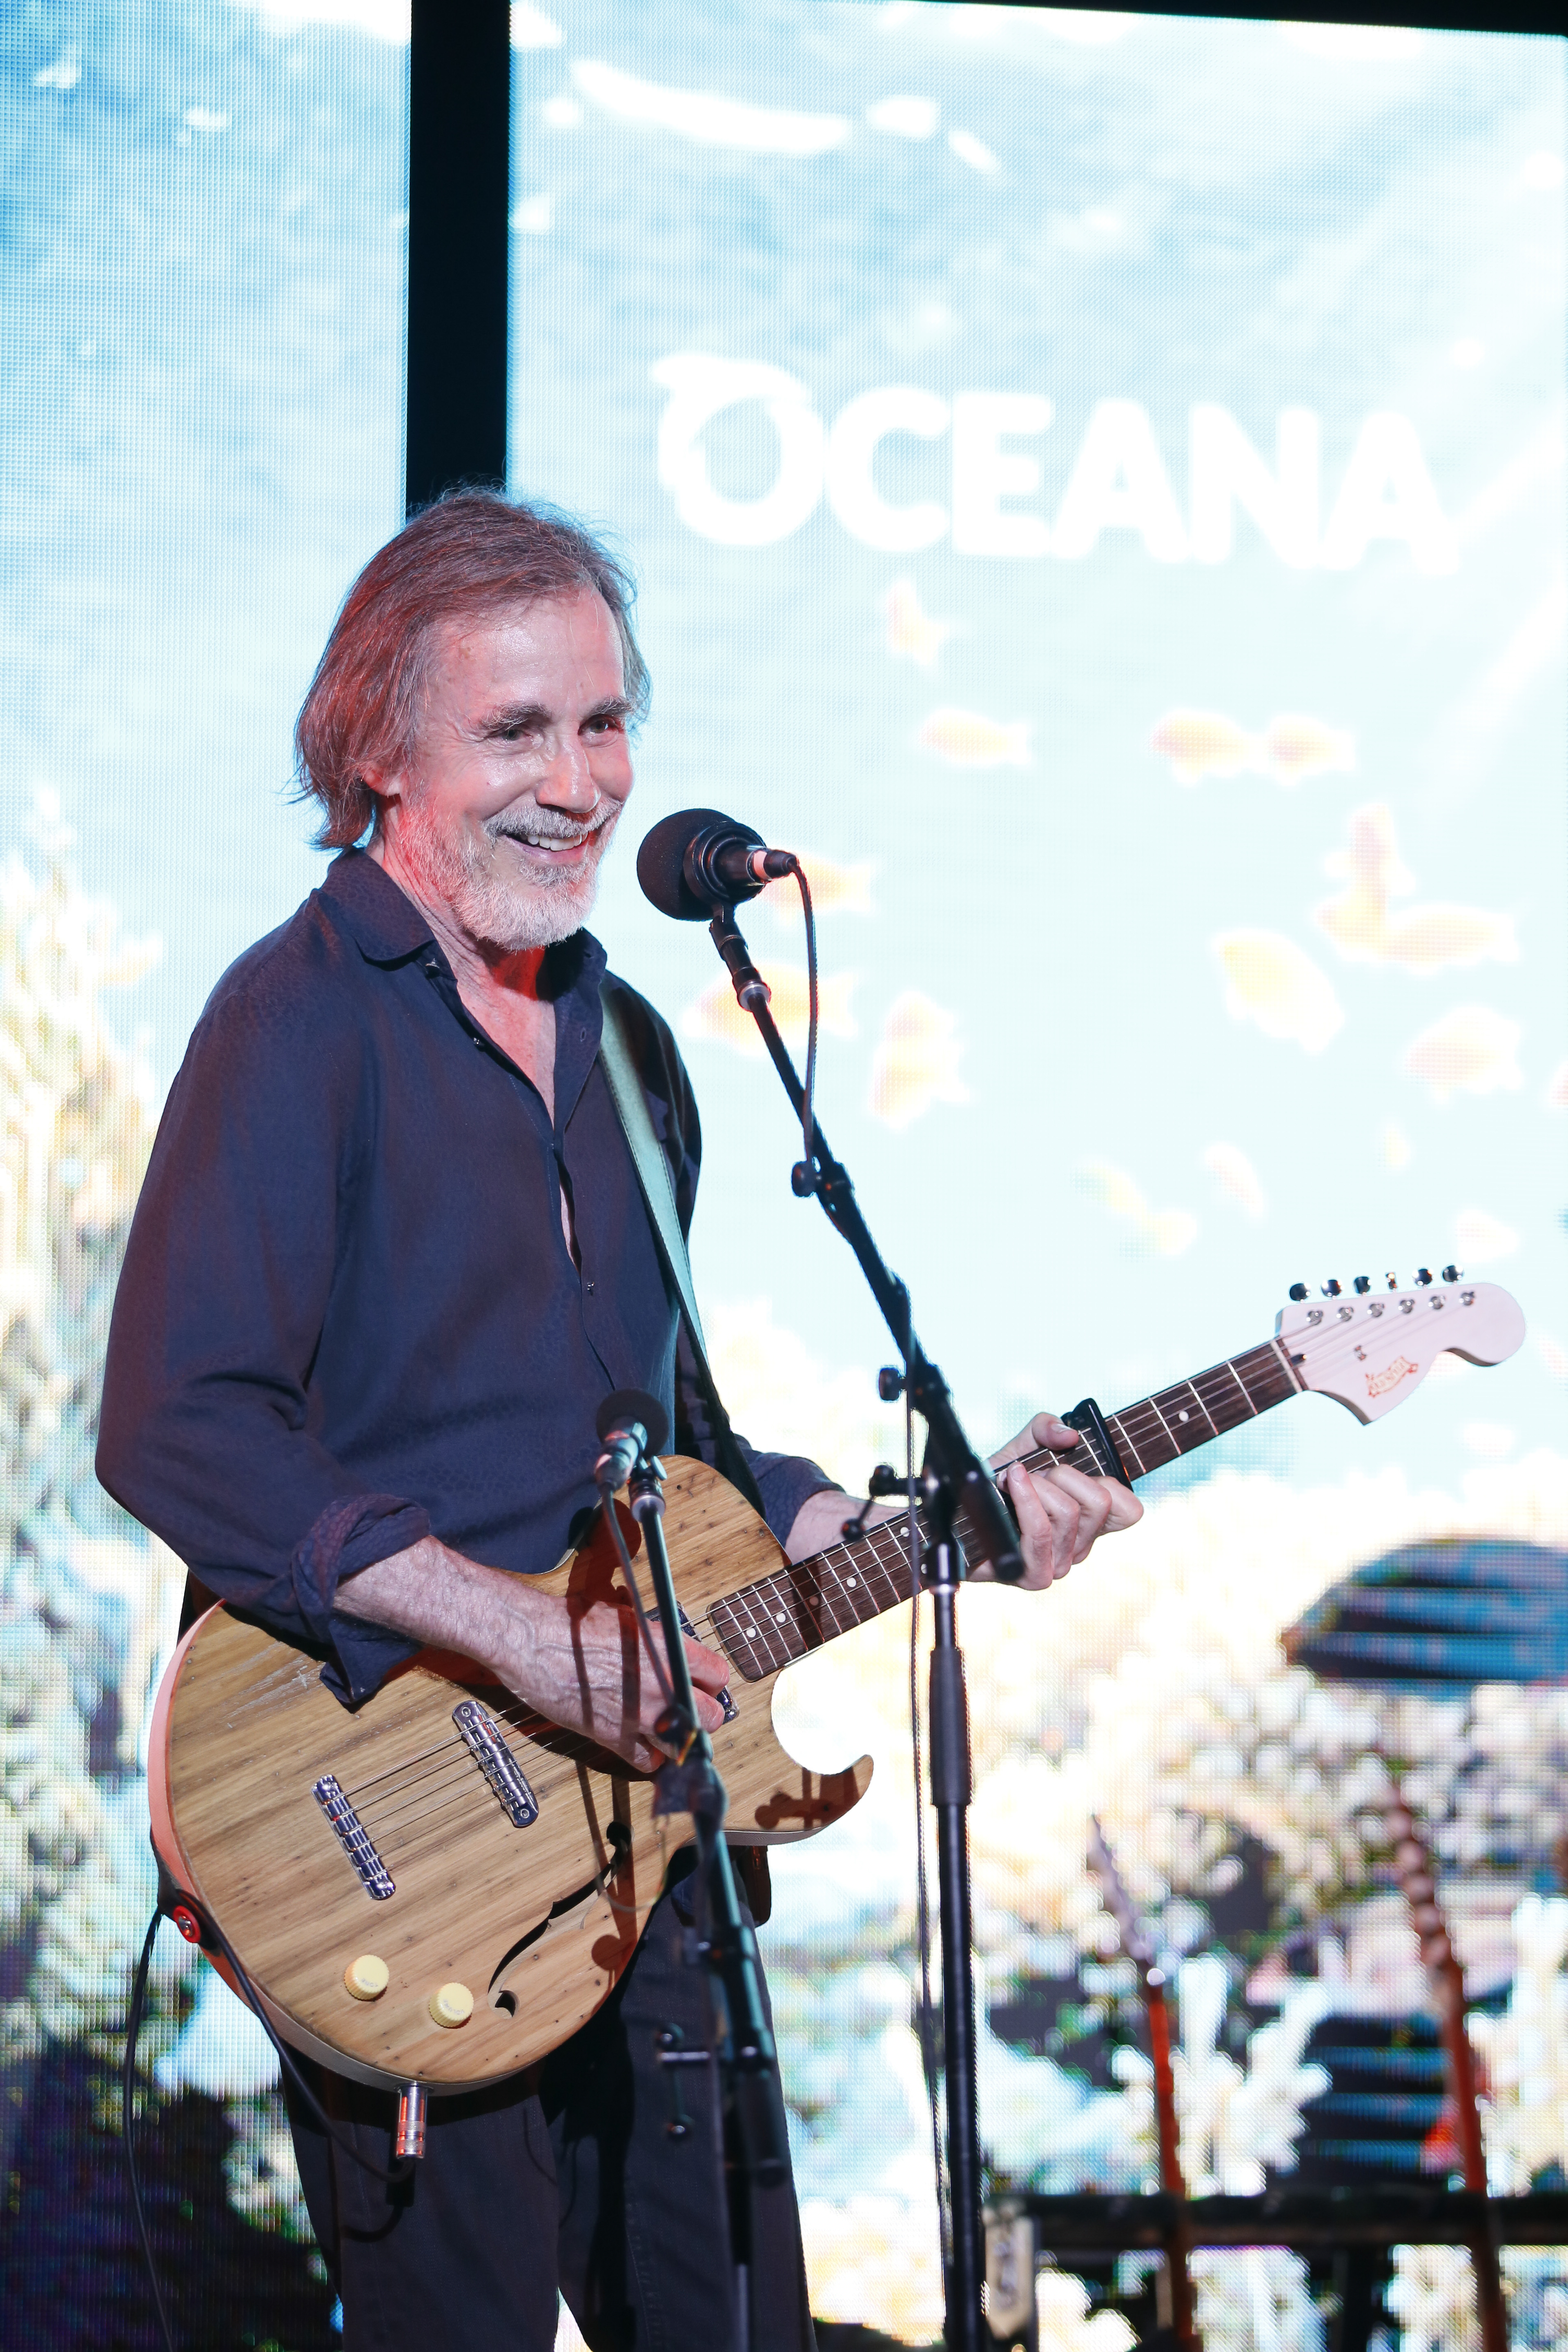 Jackson Browne delivers intimate performance for Oceana's SeaChange guests
(C) Oceana/Ryan Miller